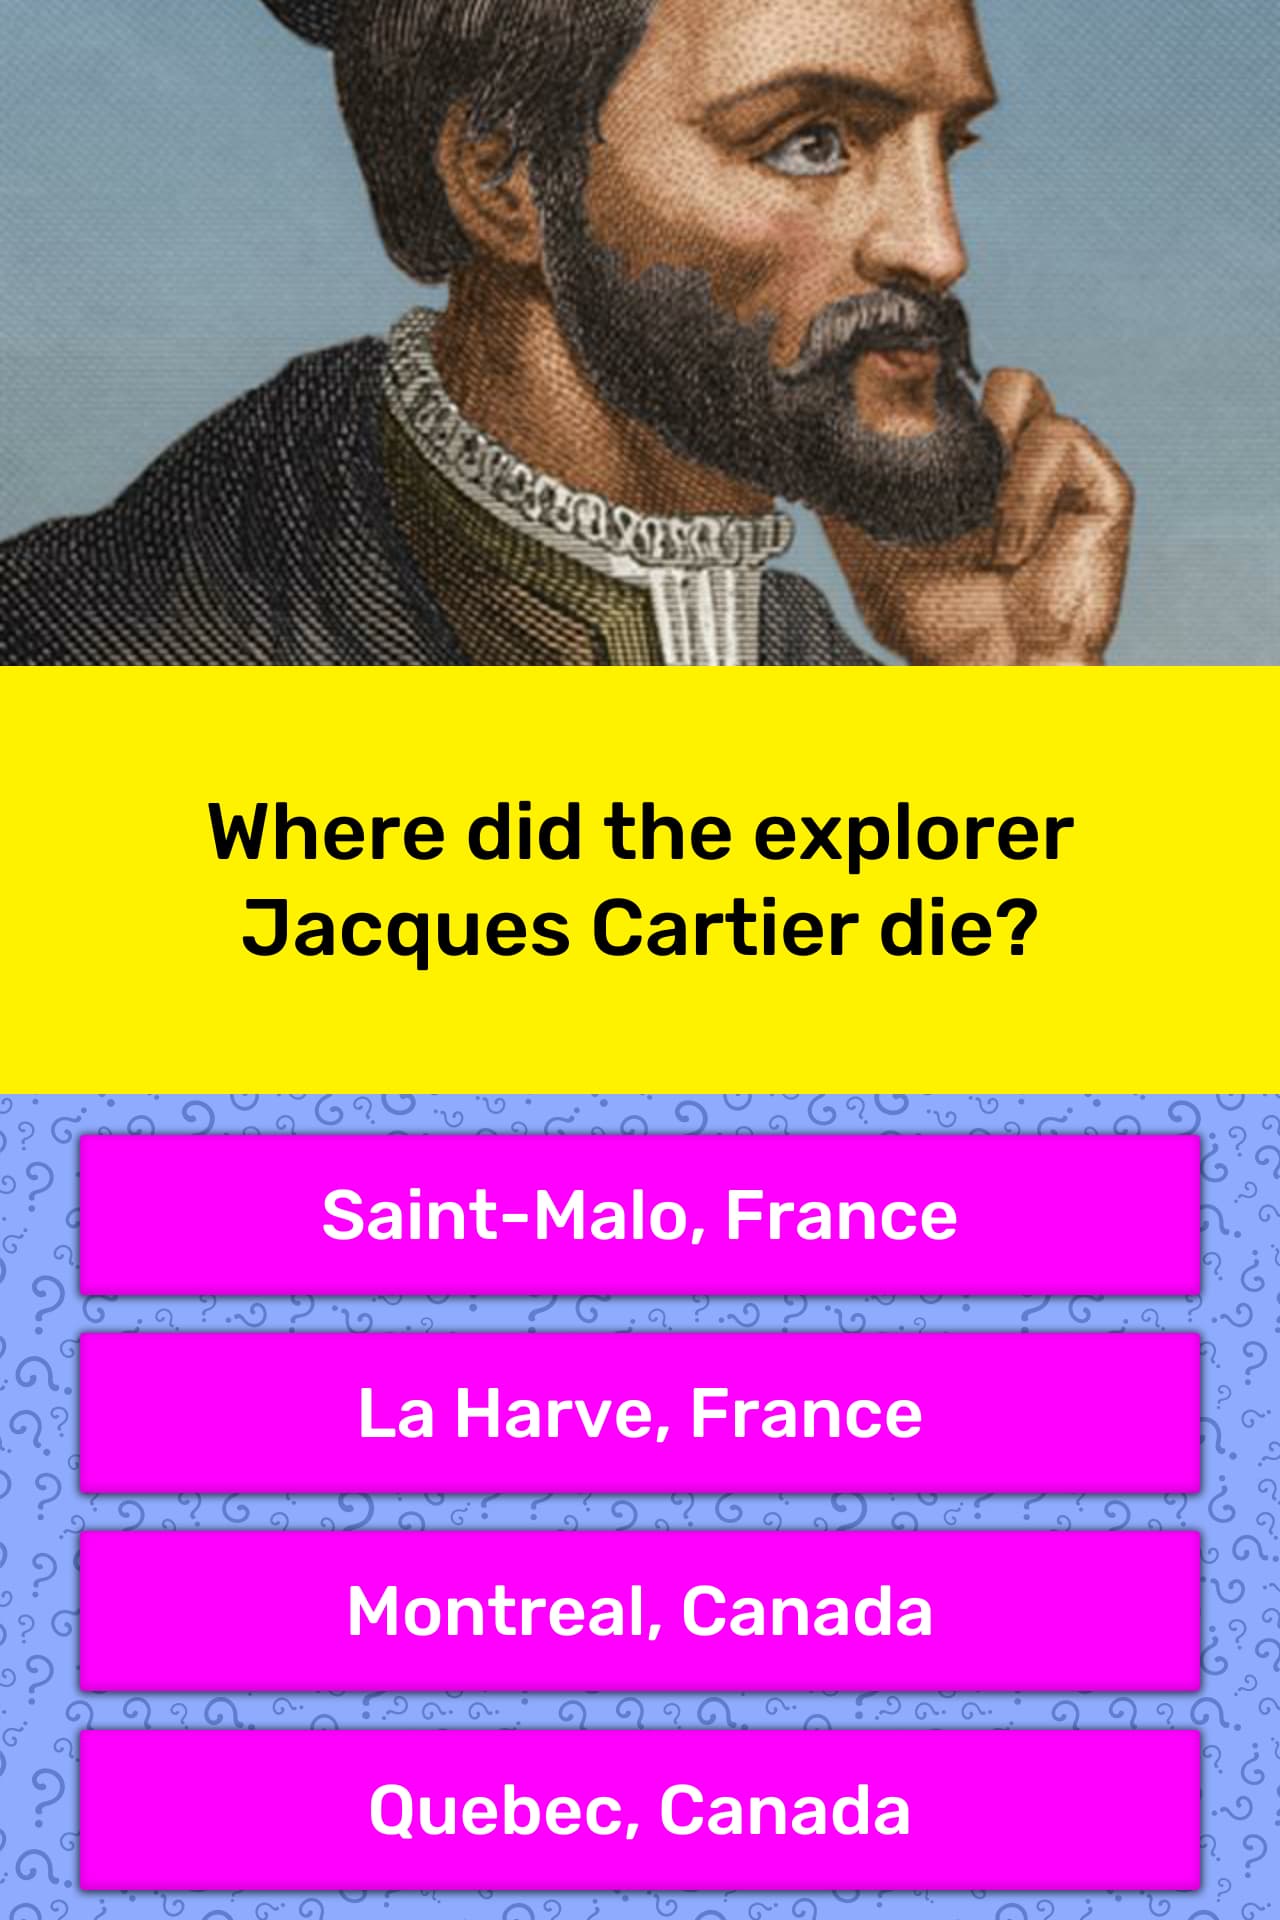 jacques cartier date of death